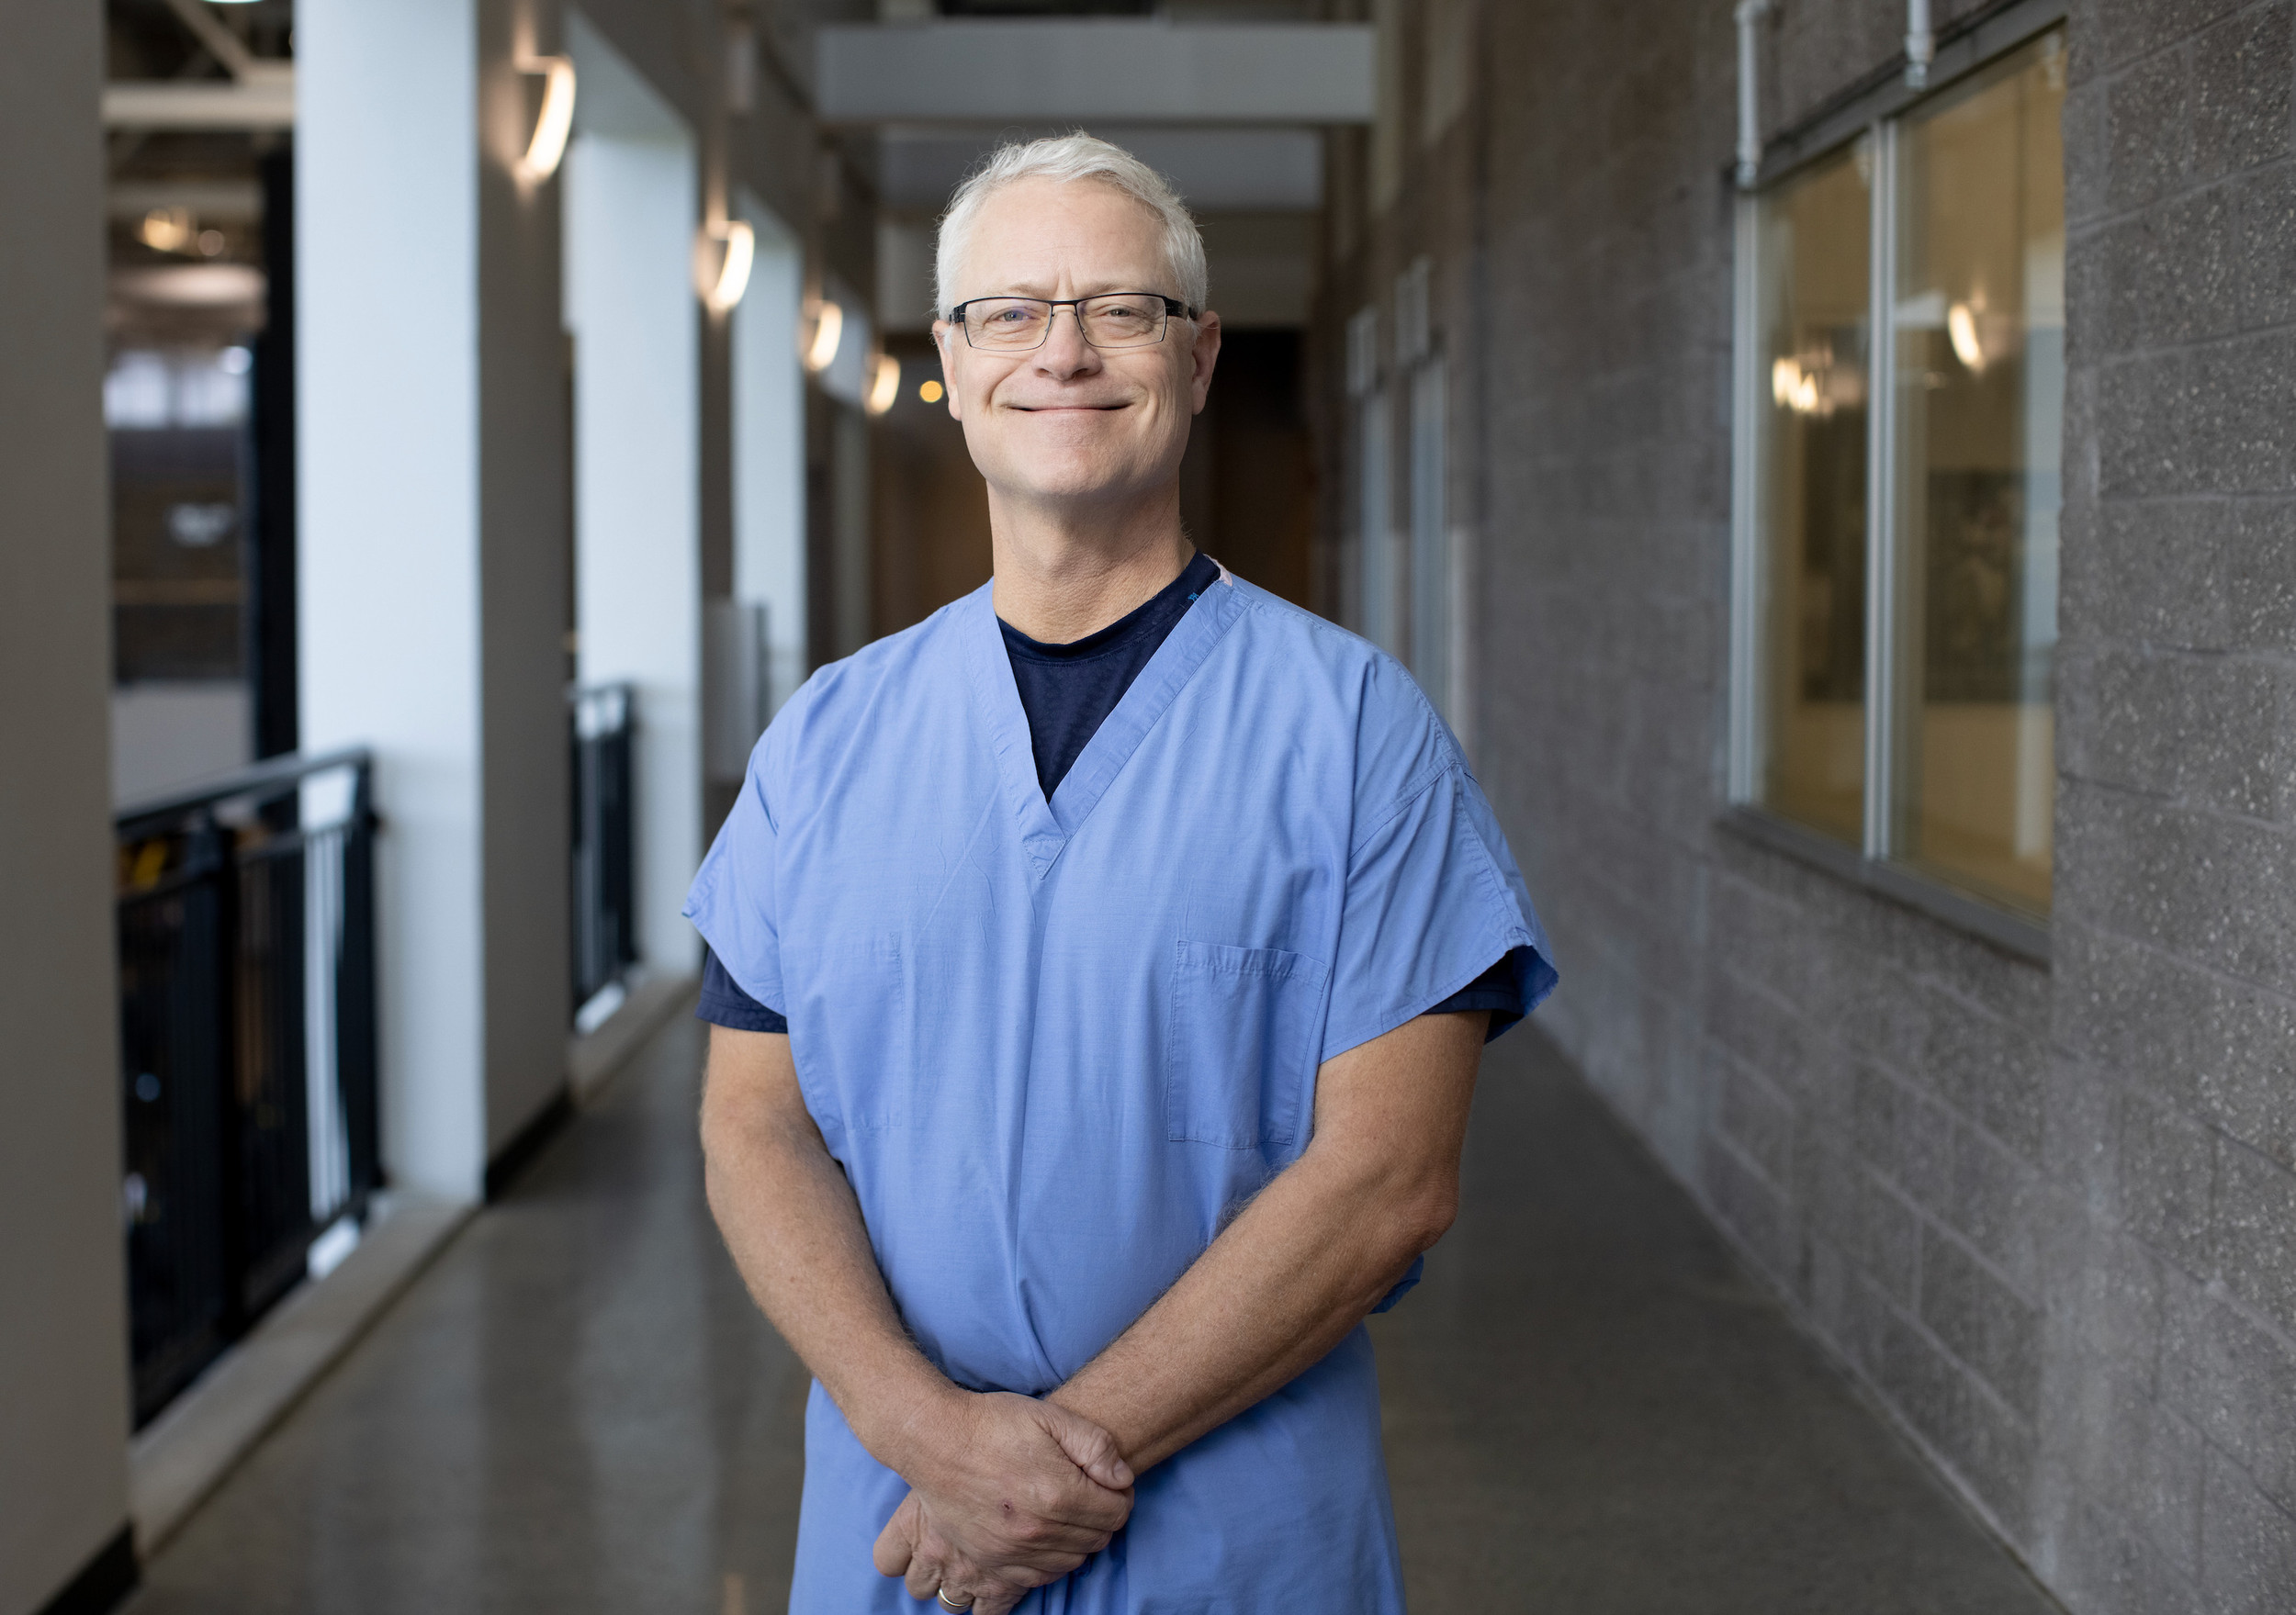 M.D. Dr. Michael Thomas | ACME Spine & Orthopedics | Florida